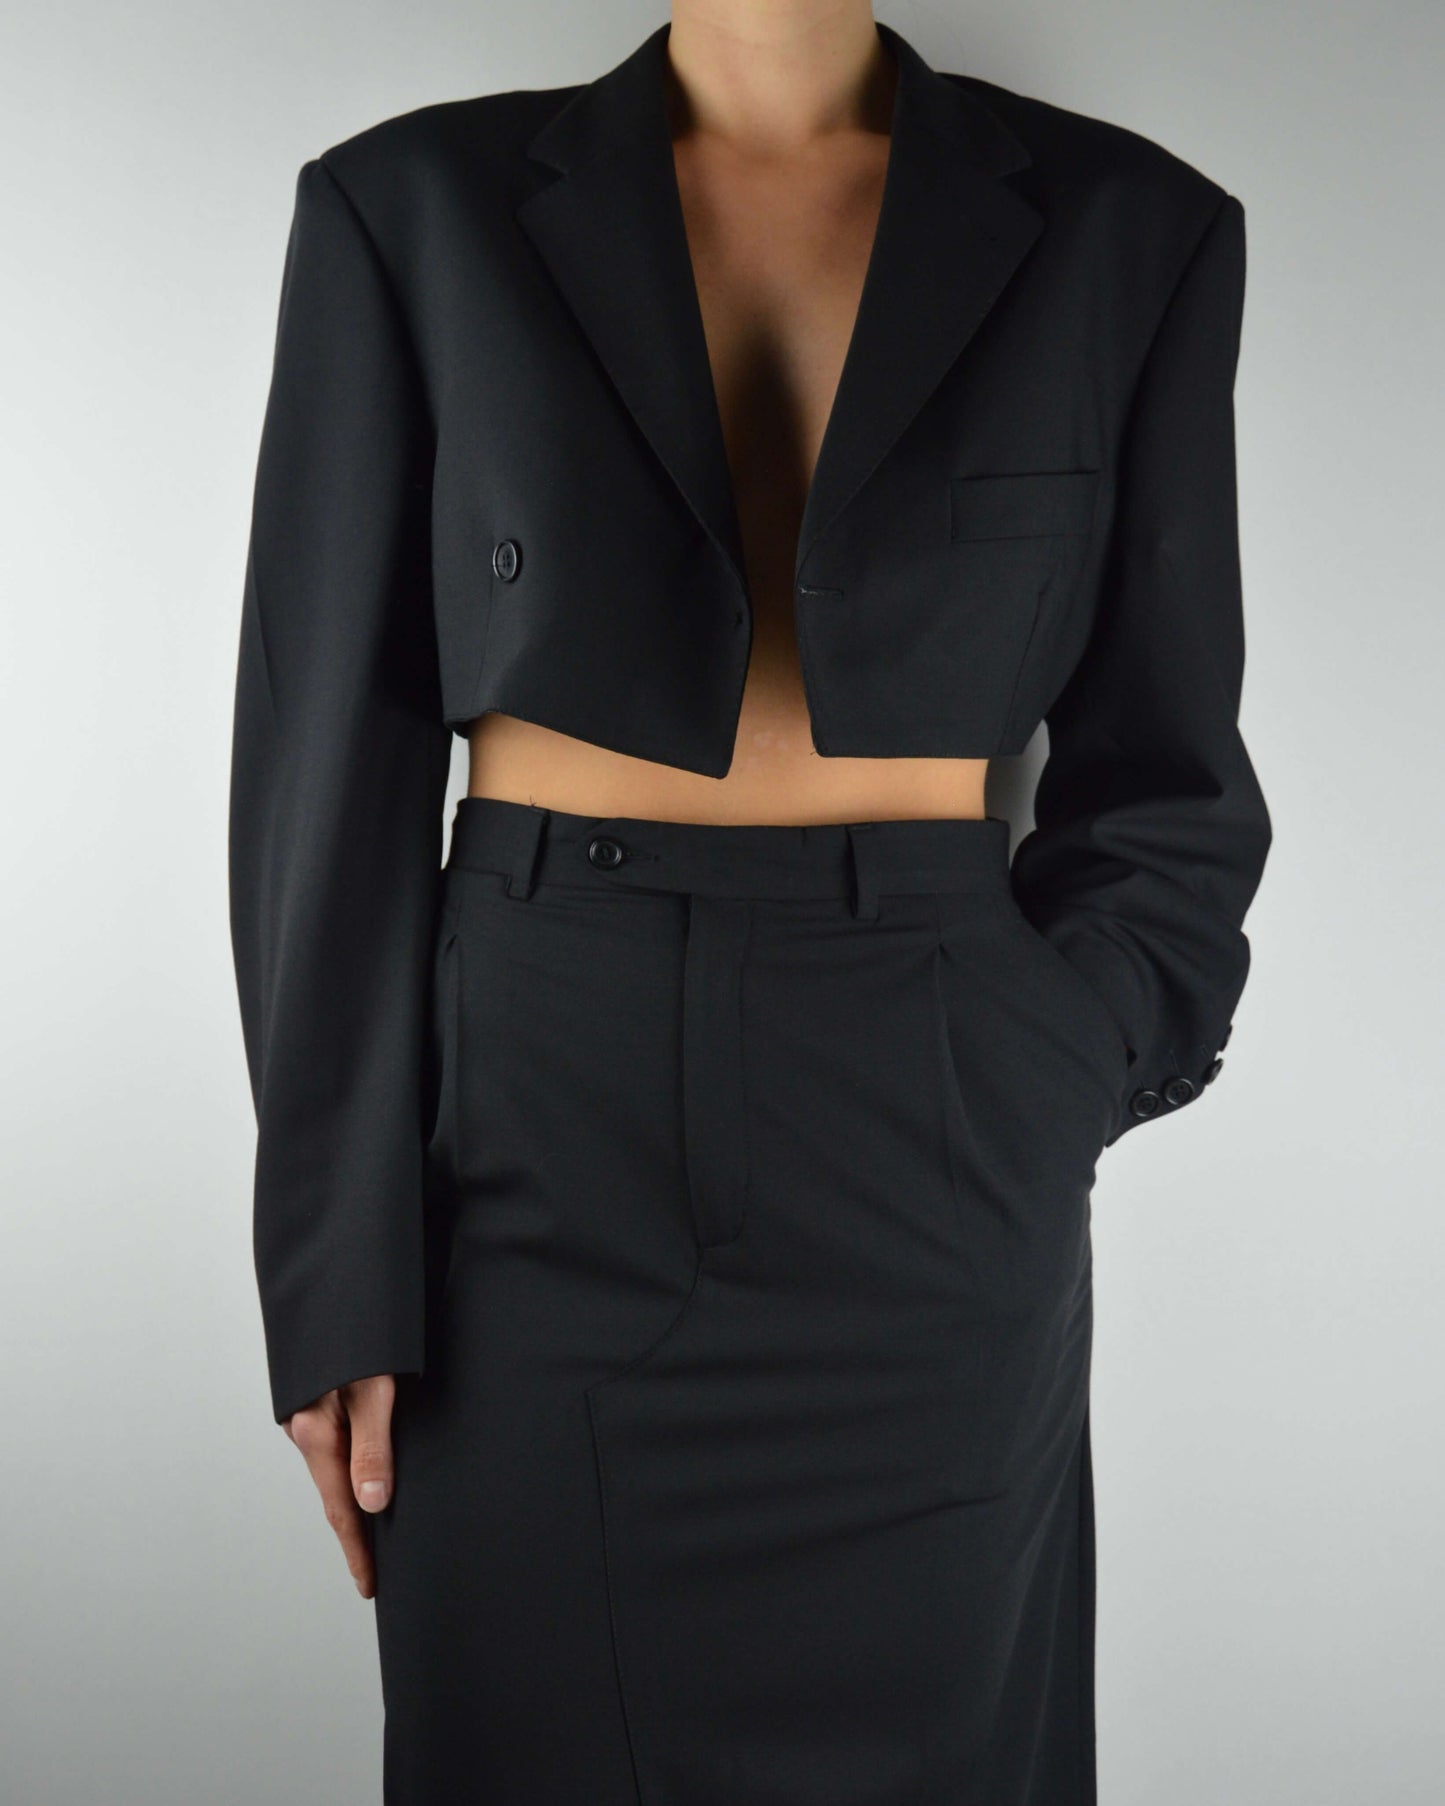 Blaset & Long Skirt - Perfect Black (XS/S)